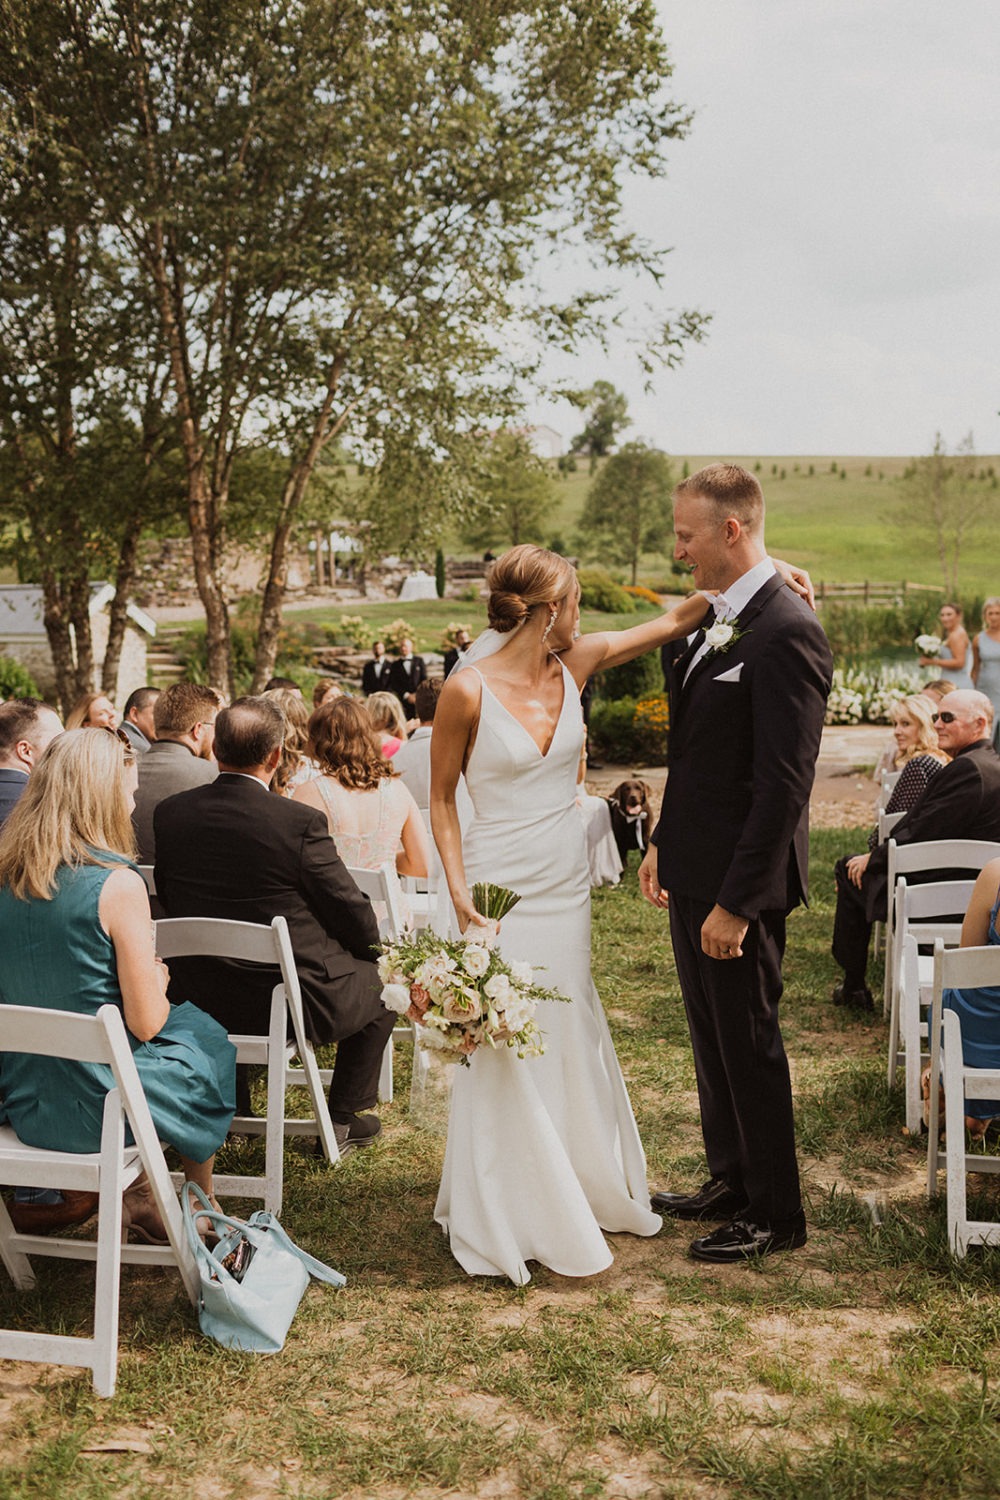 Couple looks back at dog during wedding ceremony